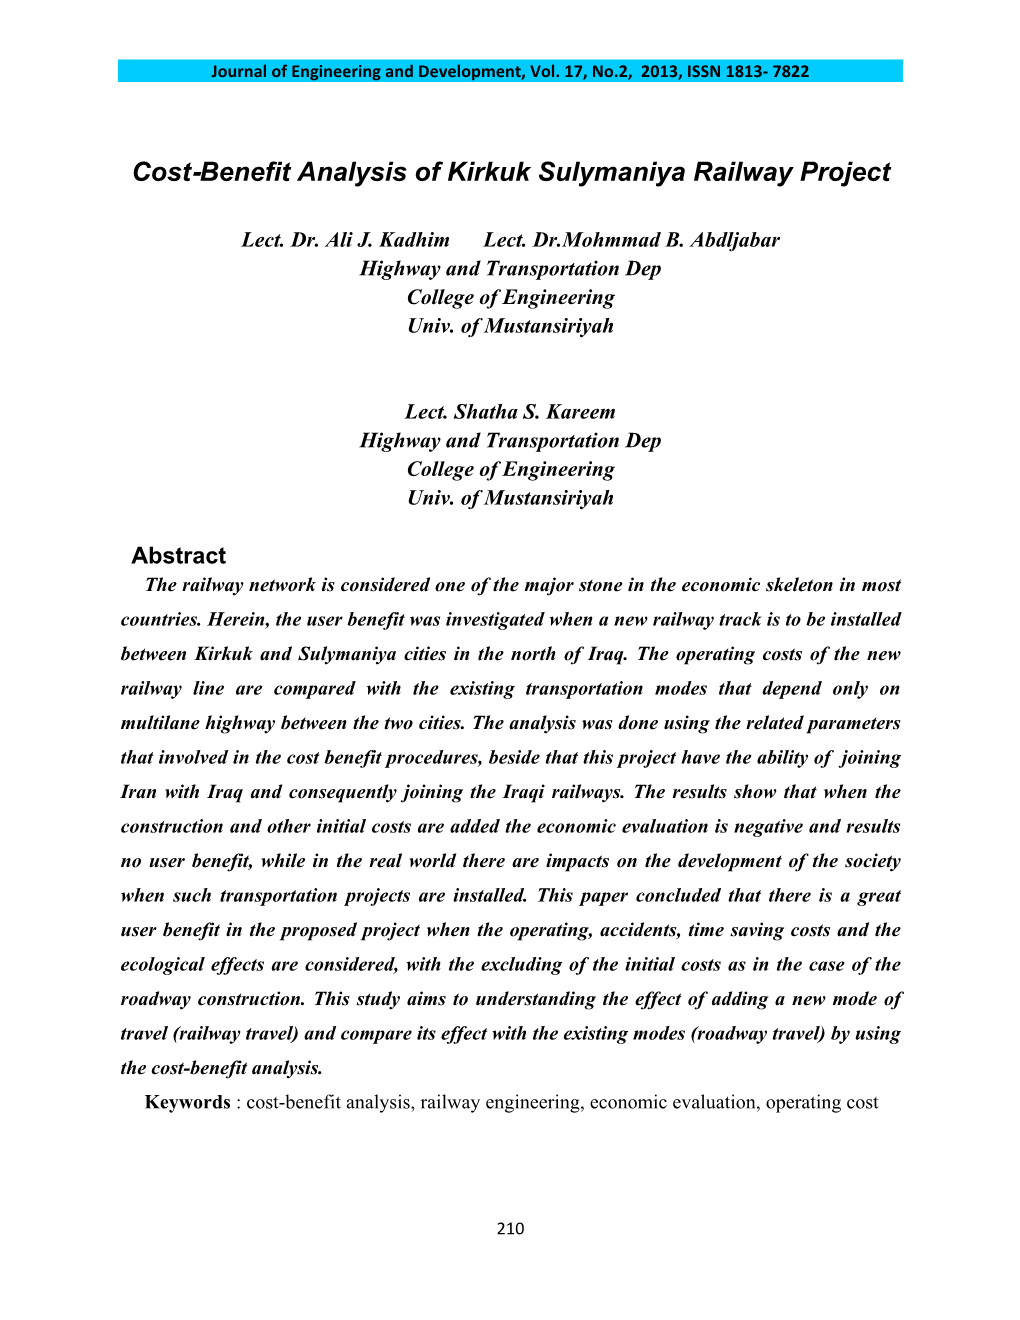 Cost-Benefit Analysis of Kirkuk Sulymaniya Railway Project